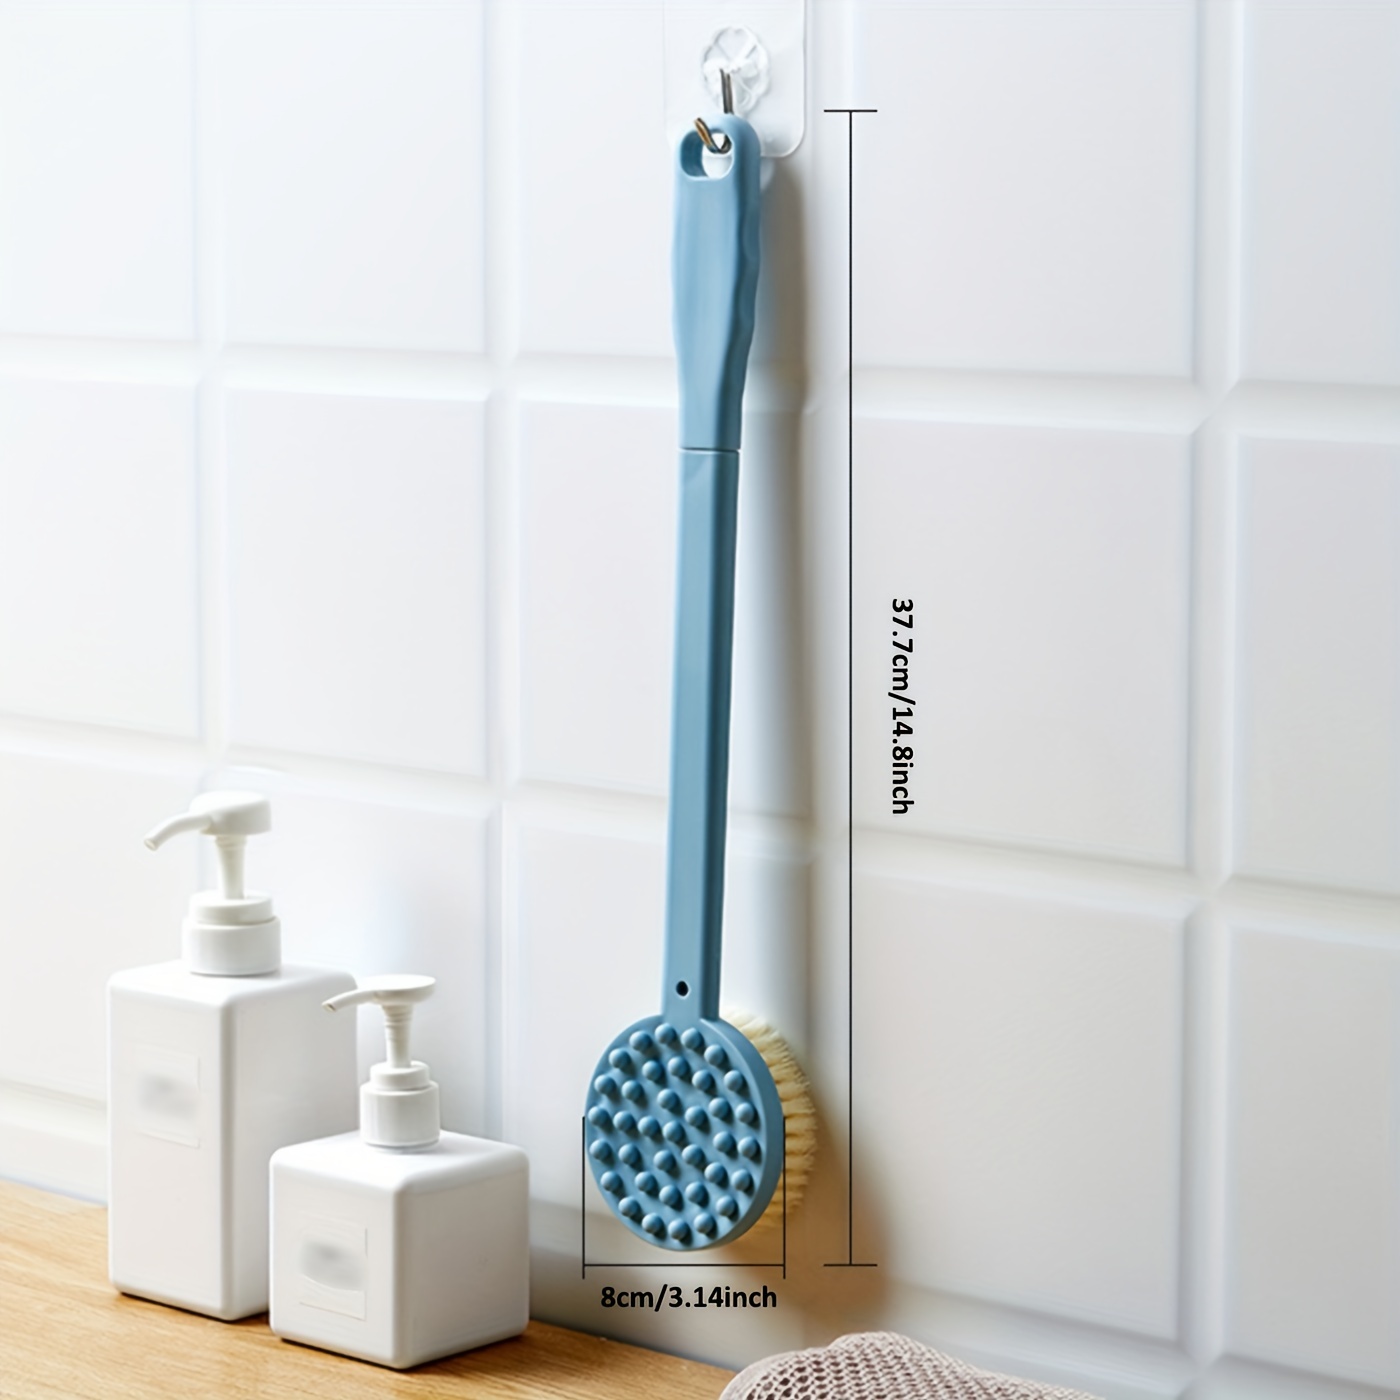 Silicone Bath Body Brush Scrubber with Soap Dispenser-Handheld Bath Scrubber  US